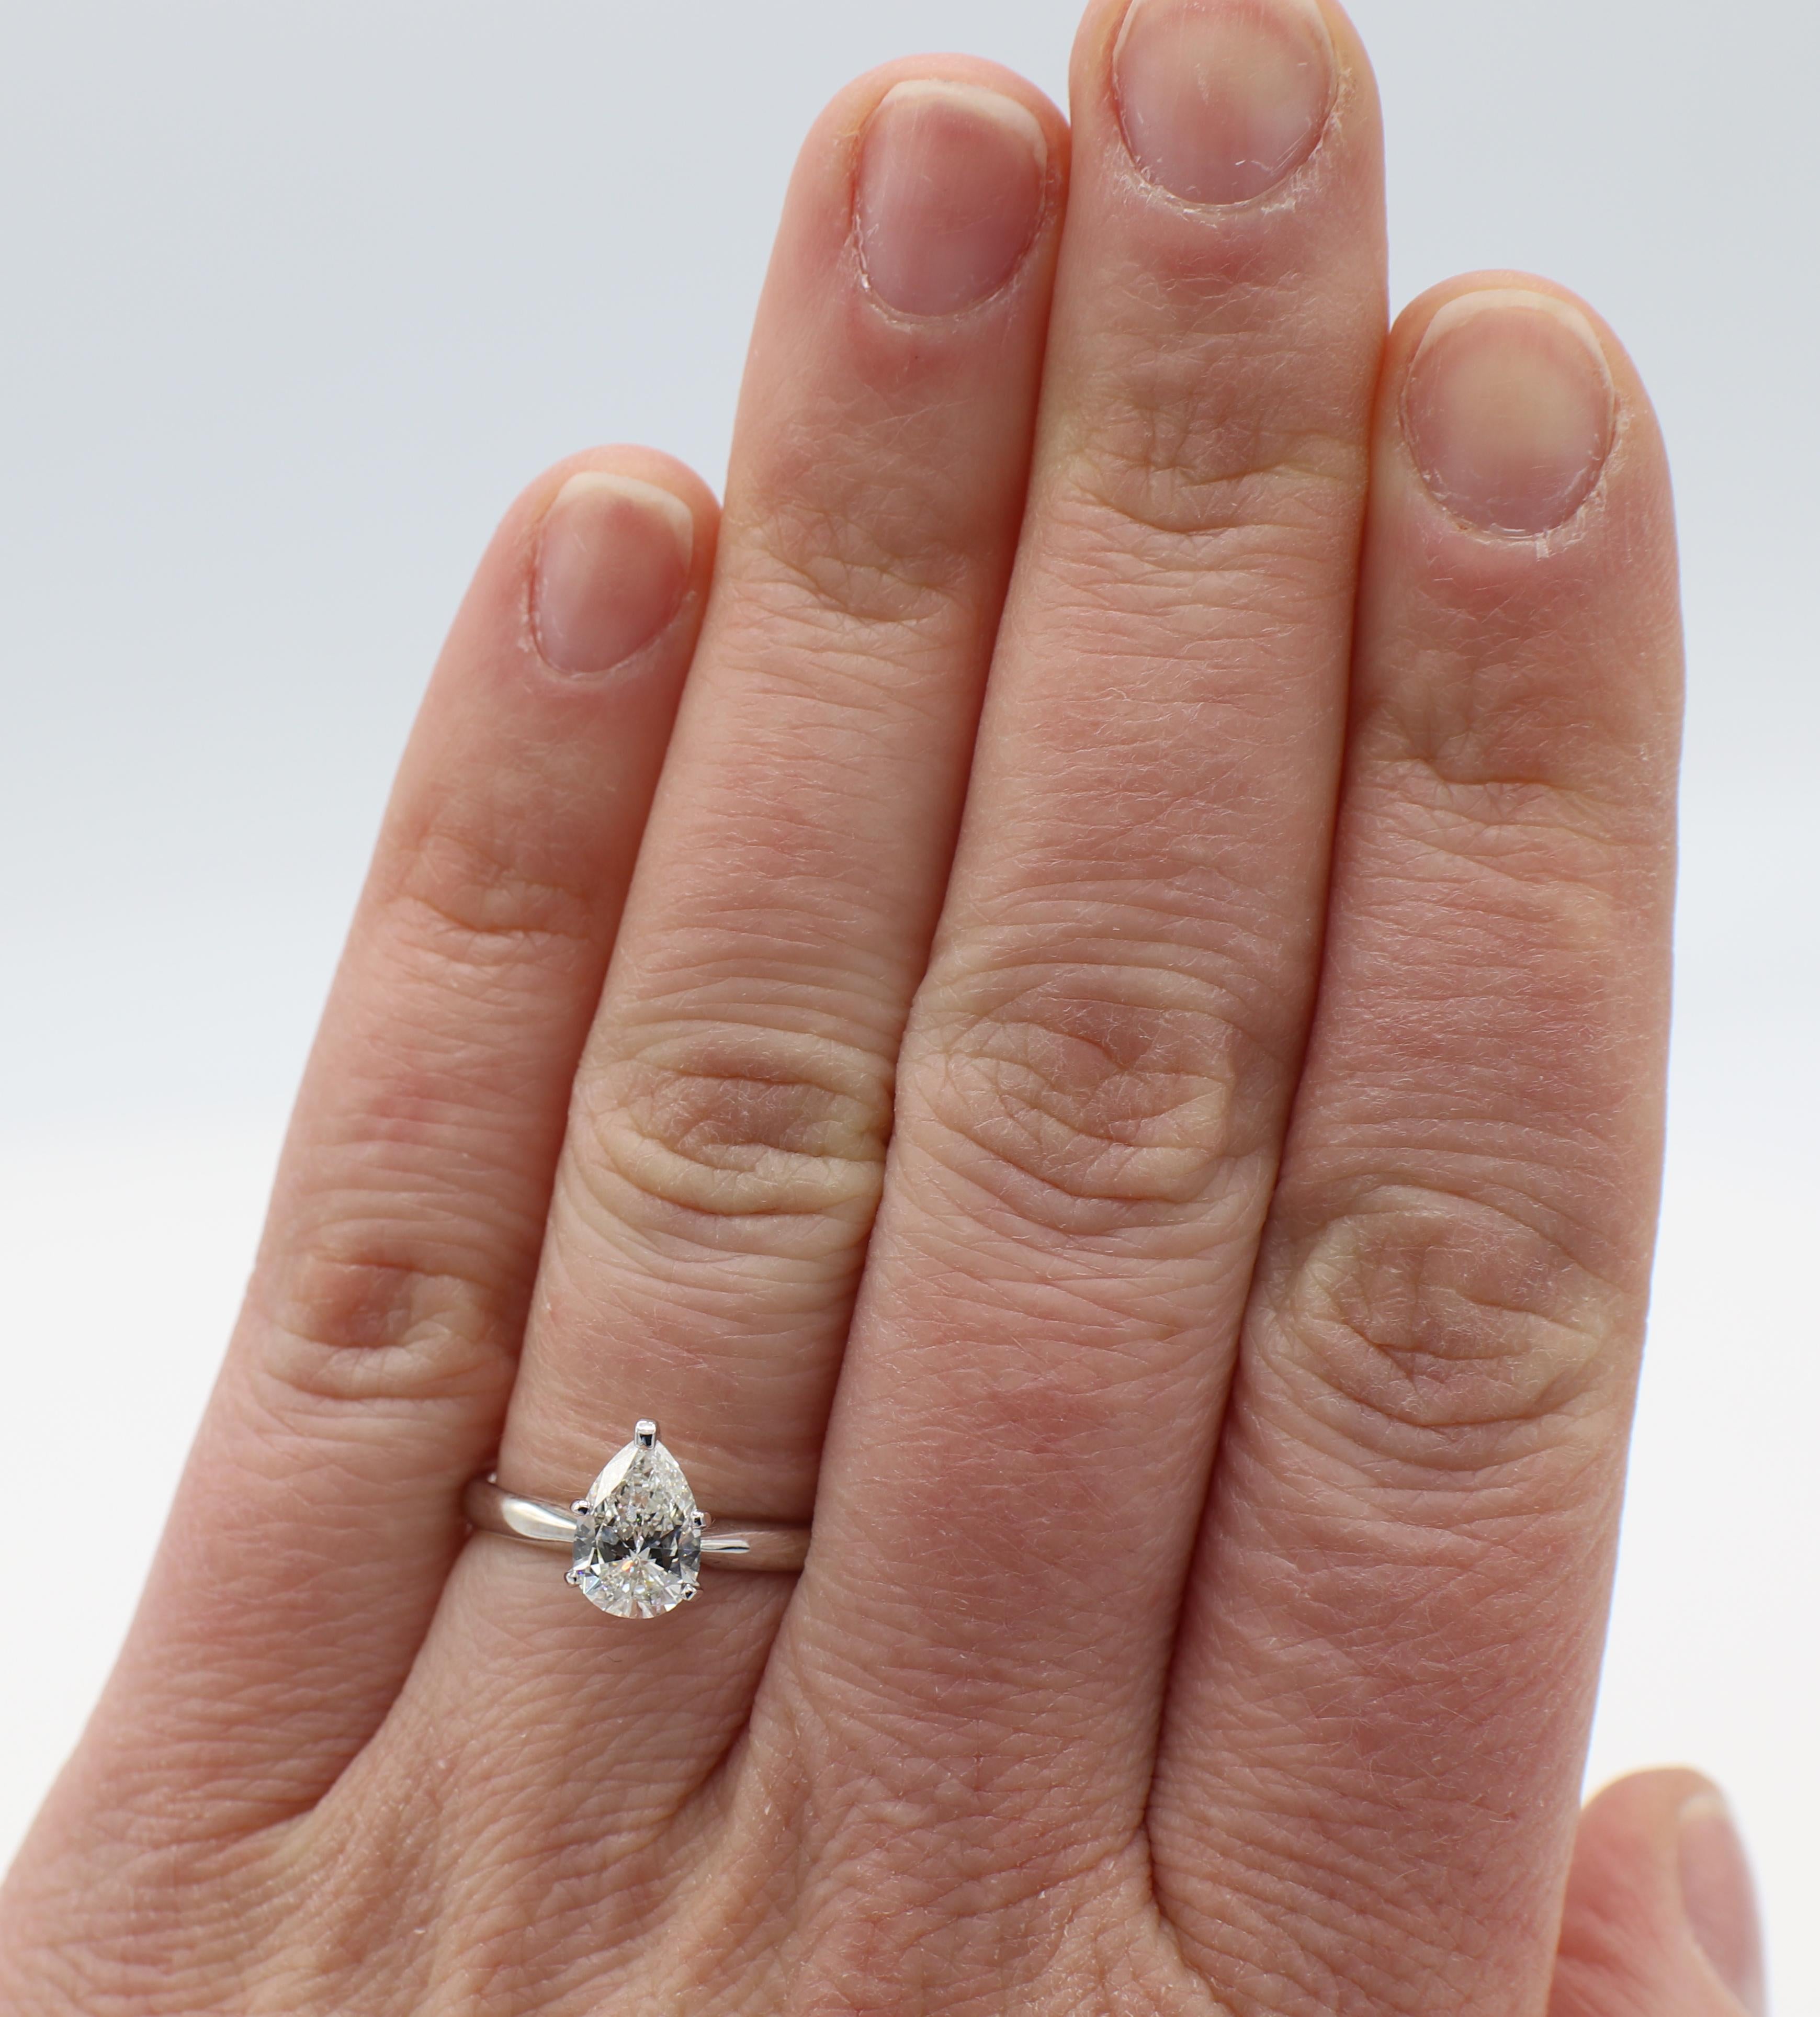 1 carat pear solitaire diamond ring